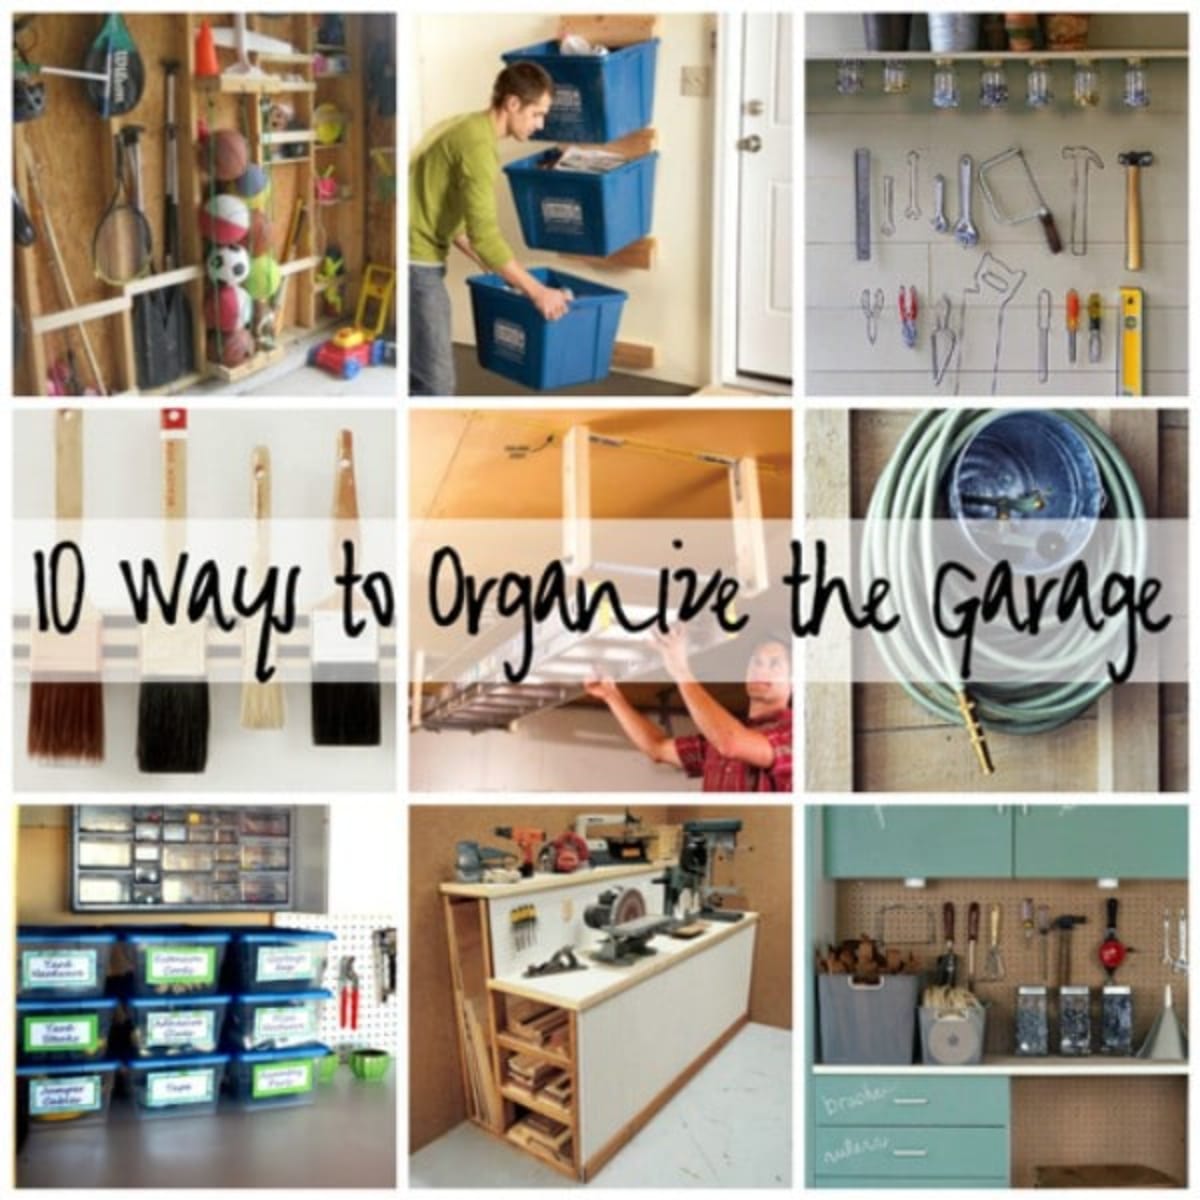 DIY garage organization collage.